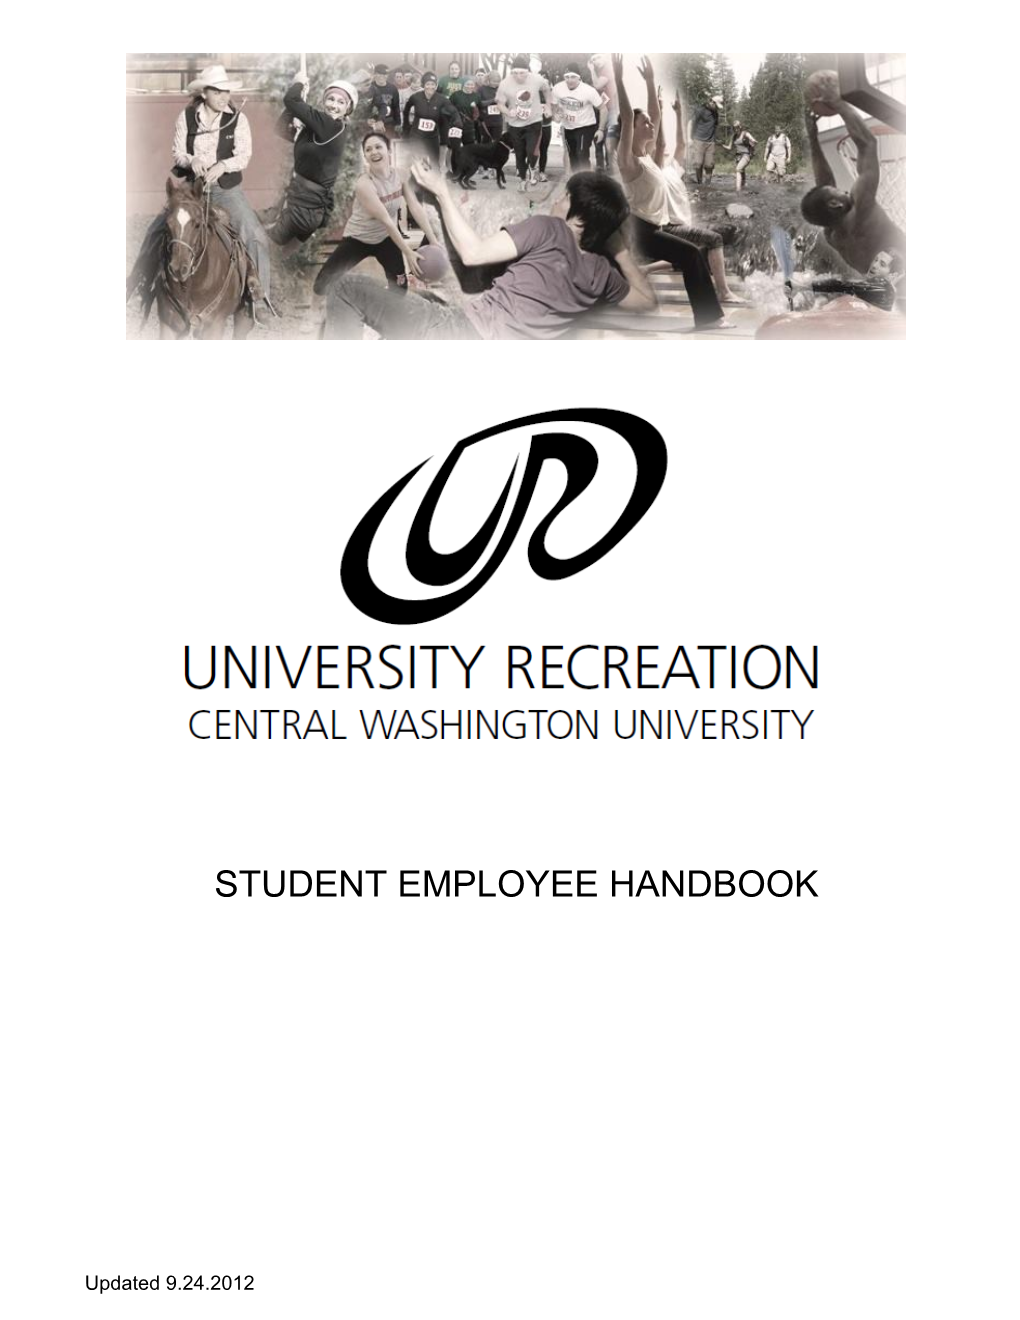 Mission Statement of University Recreation 3